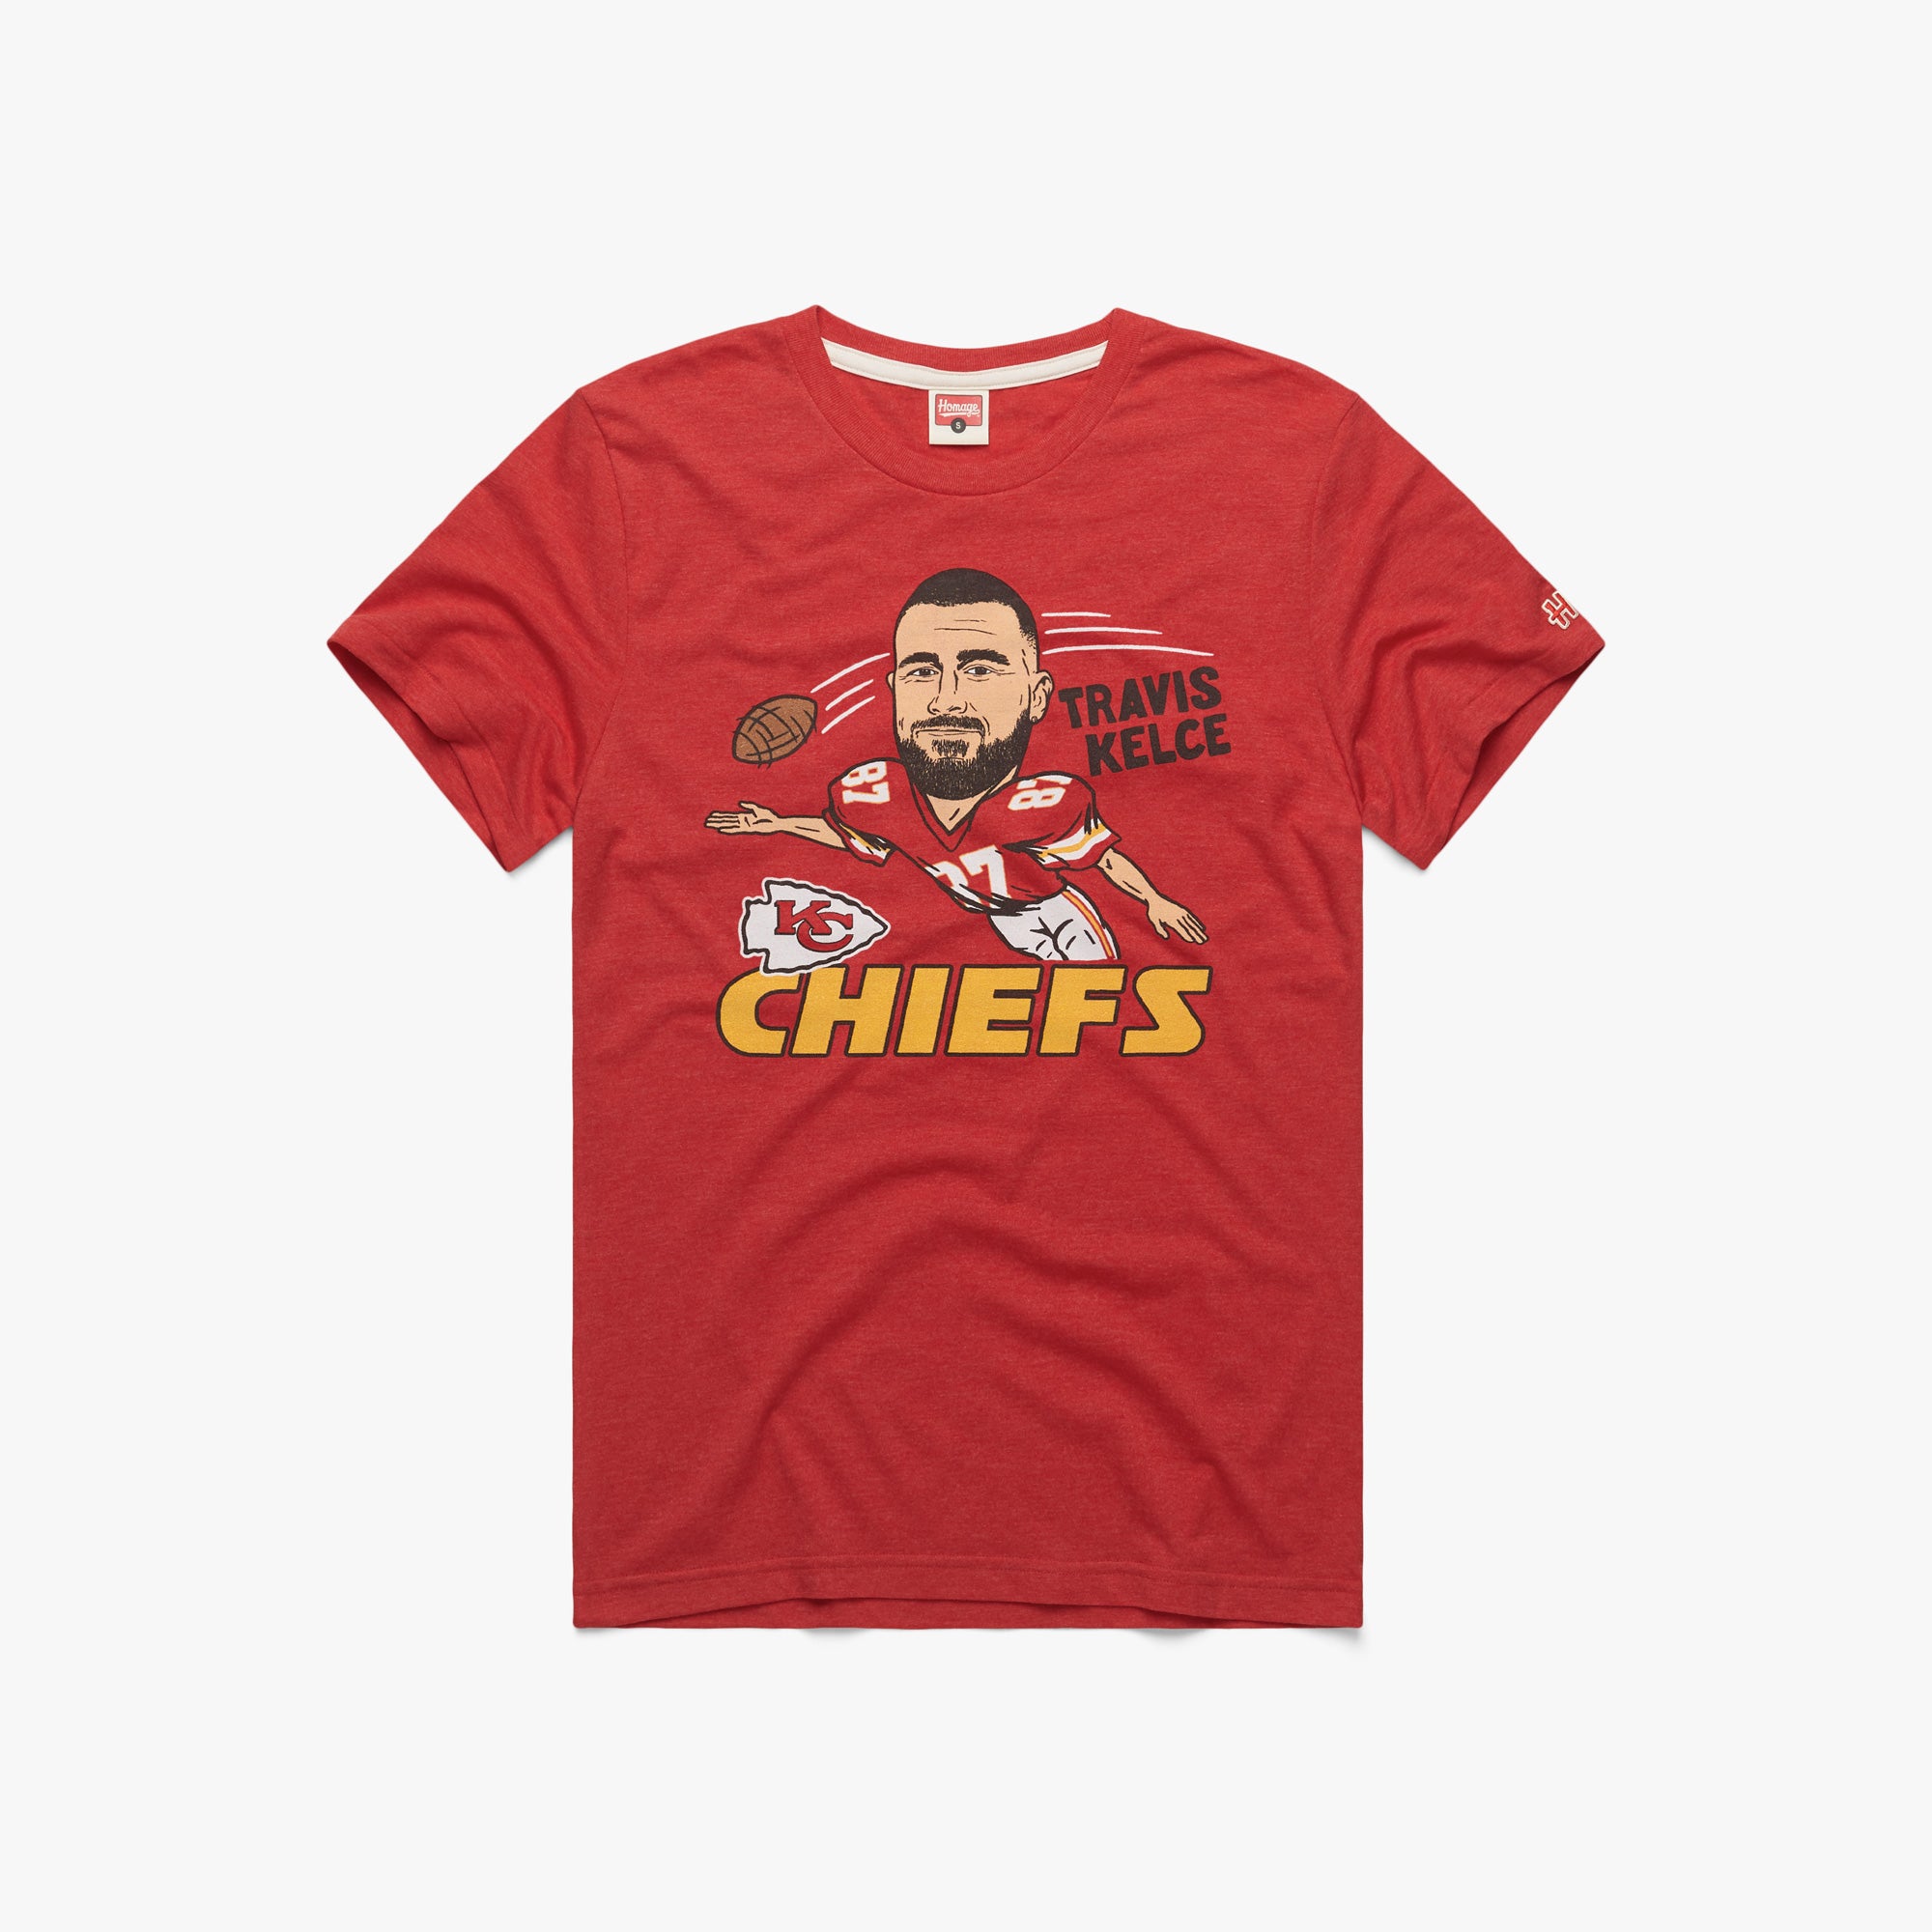 Travis Kelce Kansas City Chiefs Football Vintage Shirt